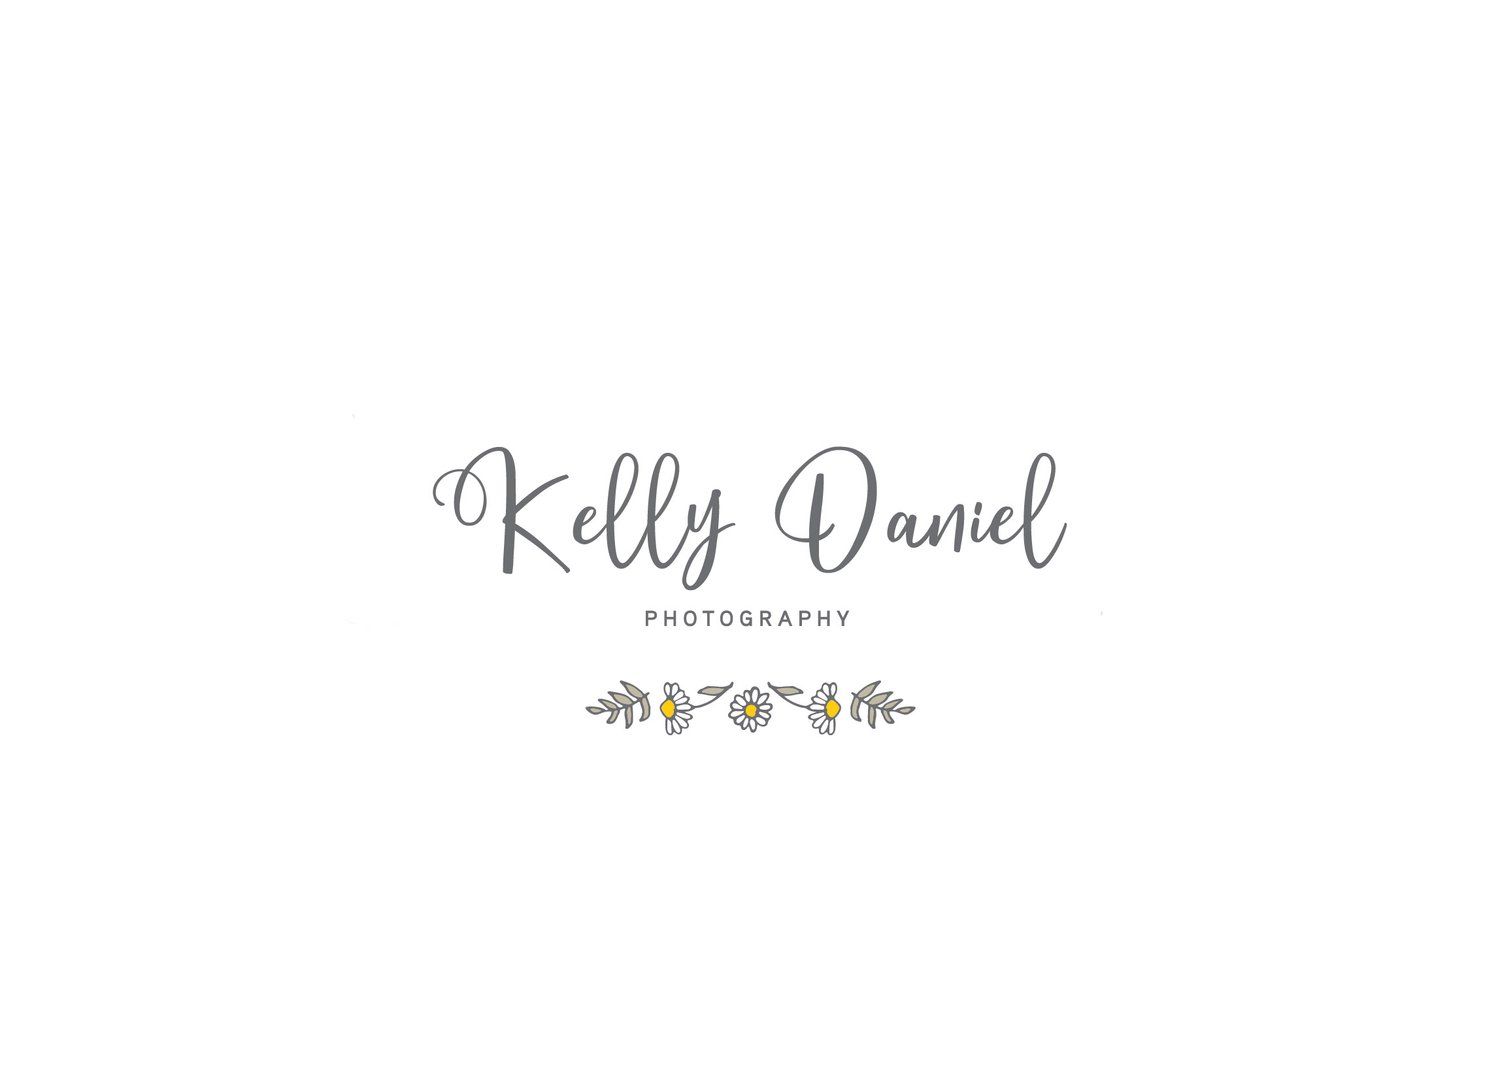 Kelly Daniel Photography / Newborn, Family and Wedding photographer near Cardiff